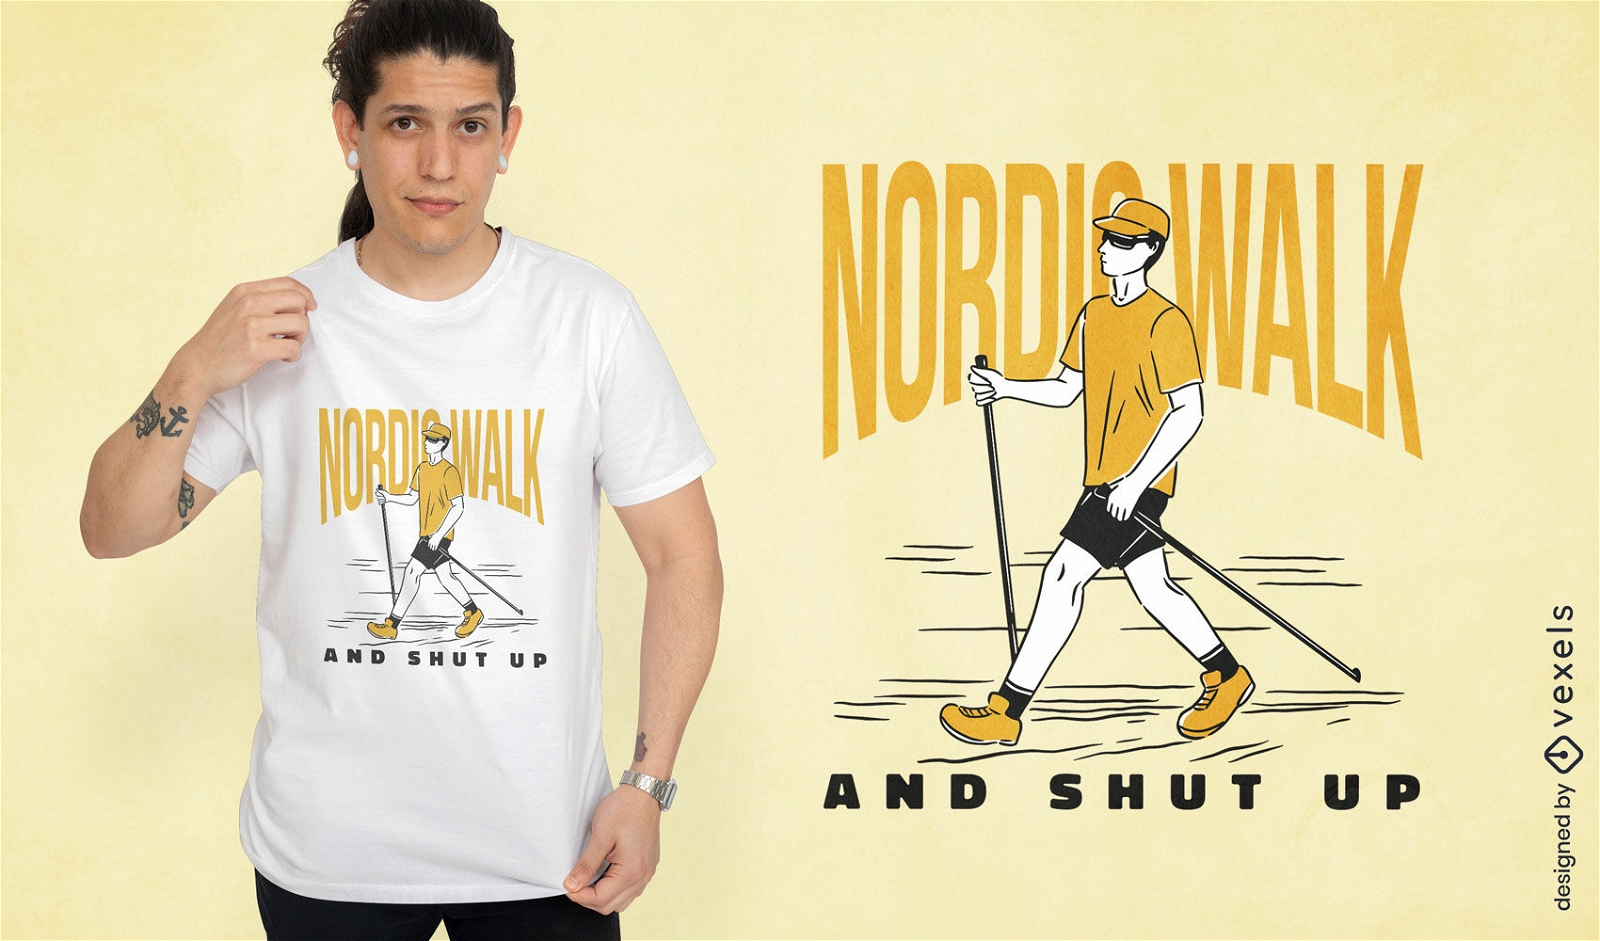 Nordic walking hobby t-shirt design